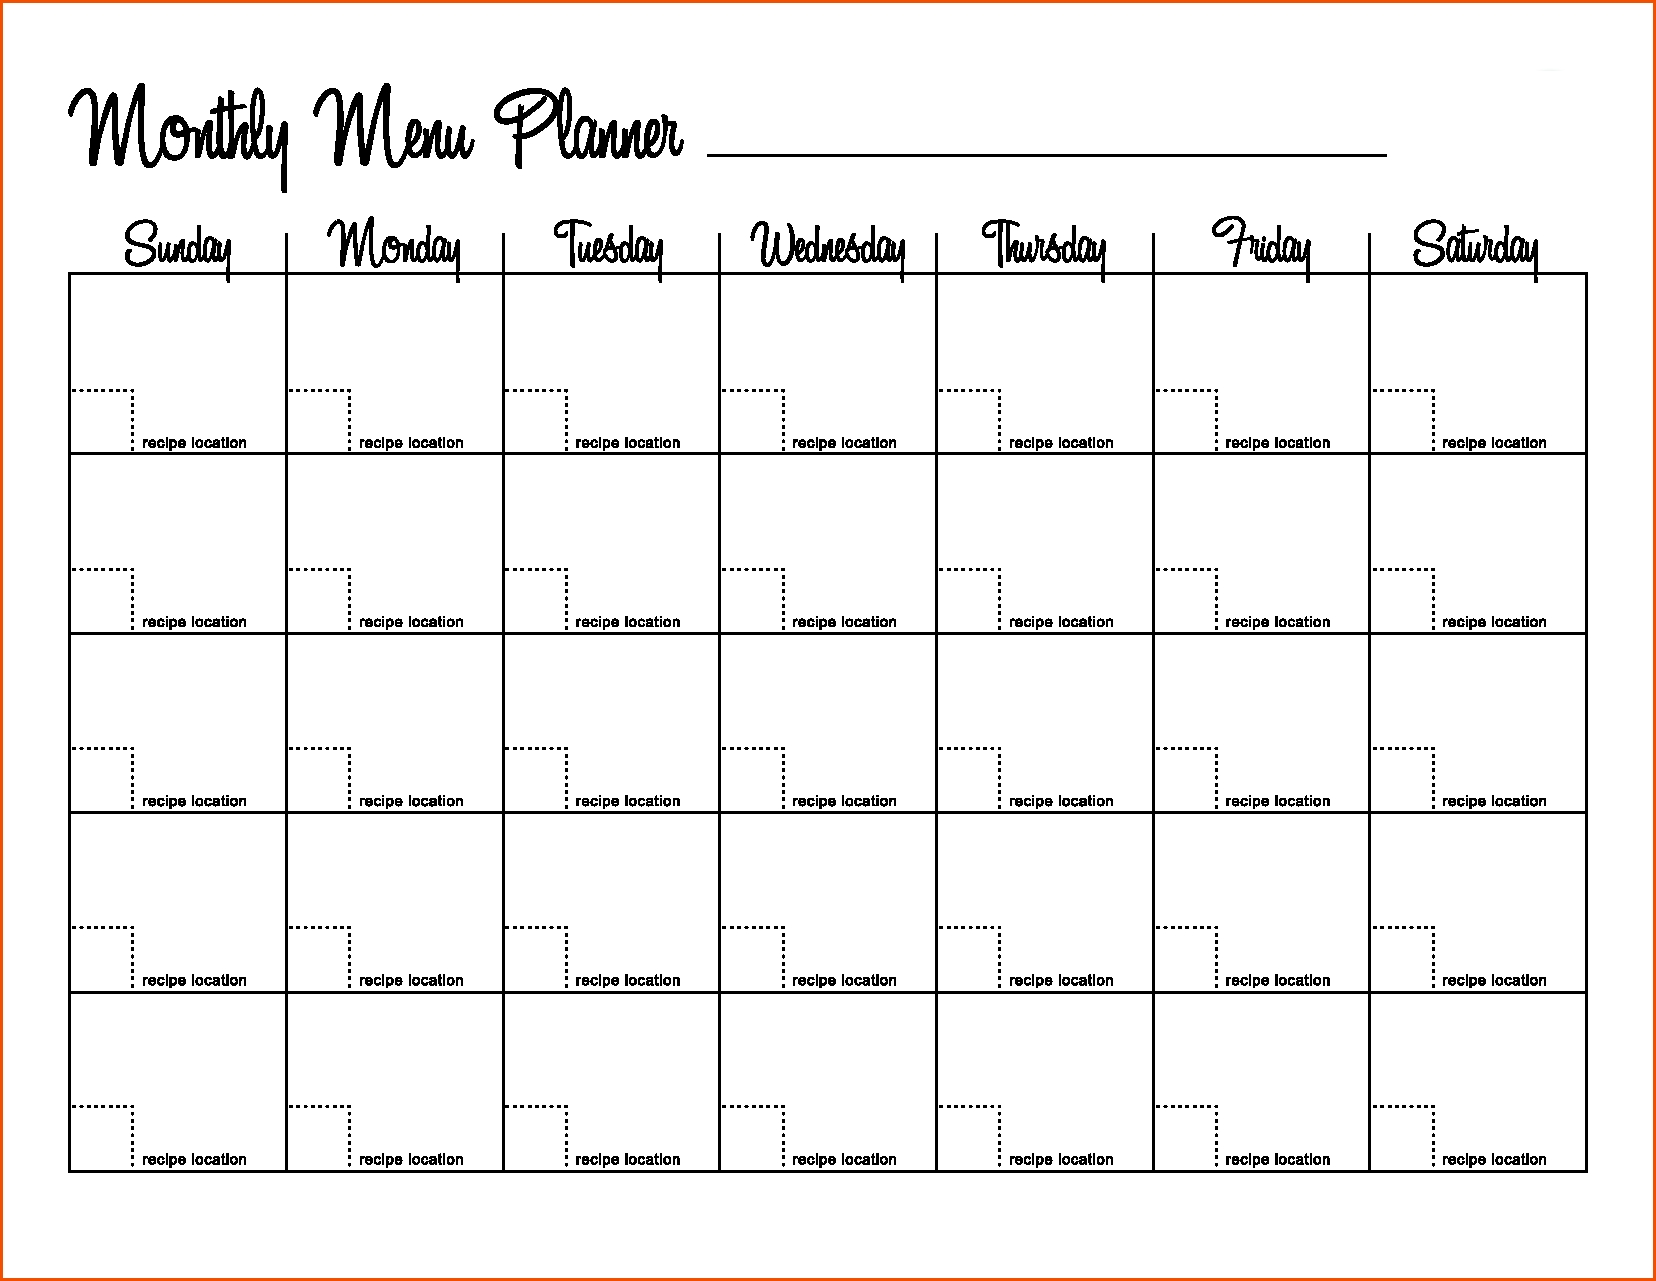 Schedule Template Monthly Planner Pinterest Free Calendar | Smorad inside Printable Monthly Calendar Planner Template